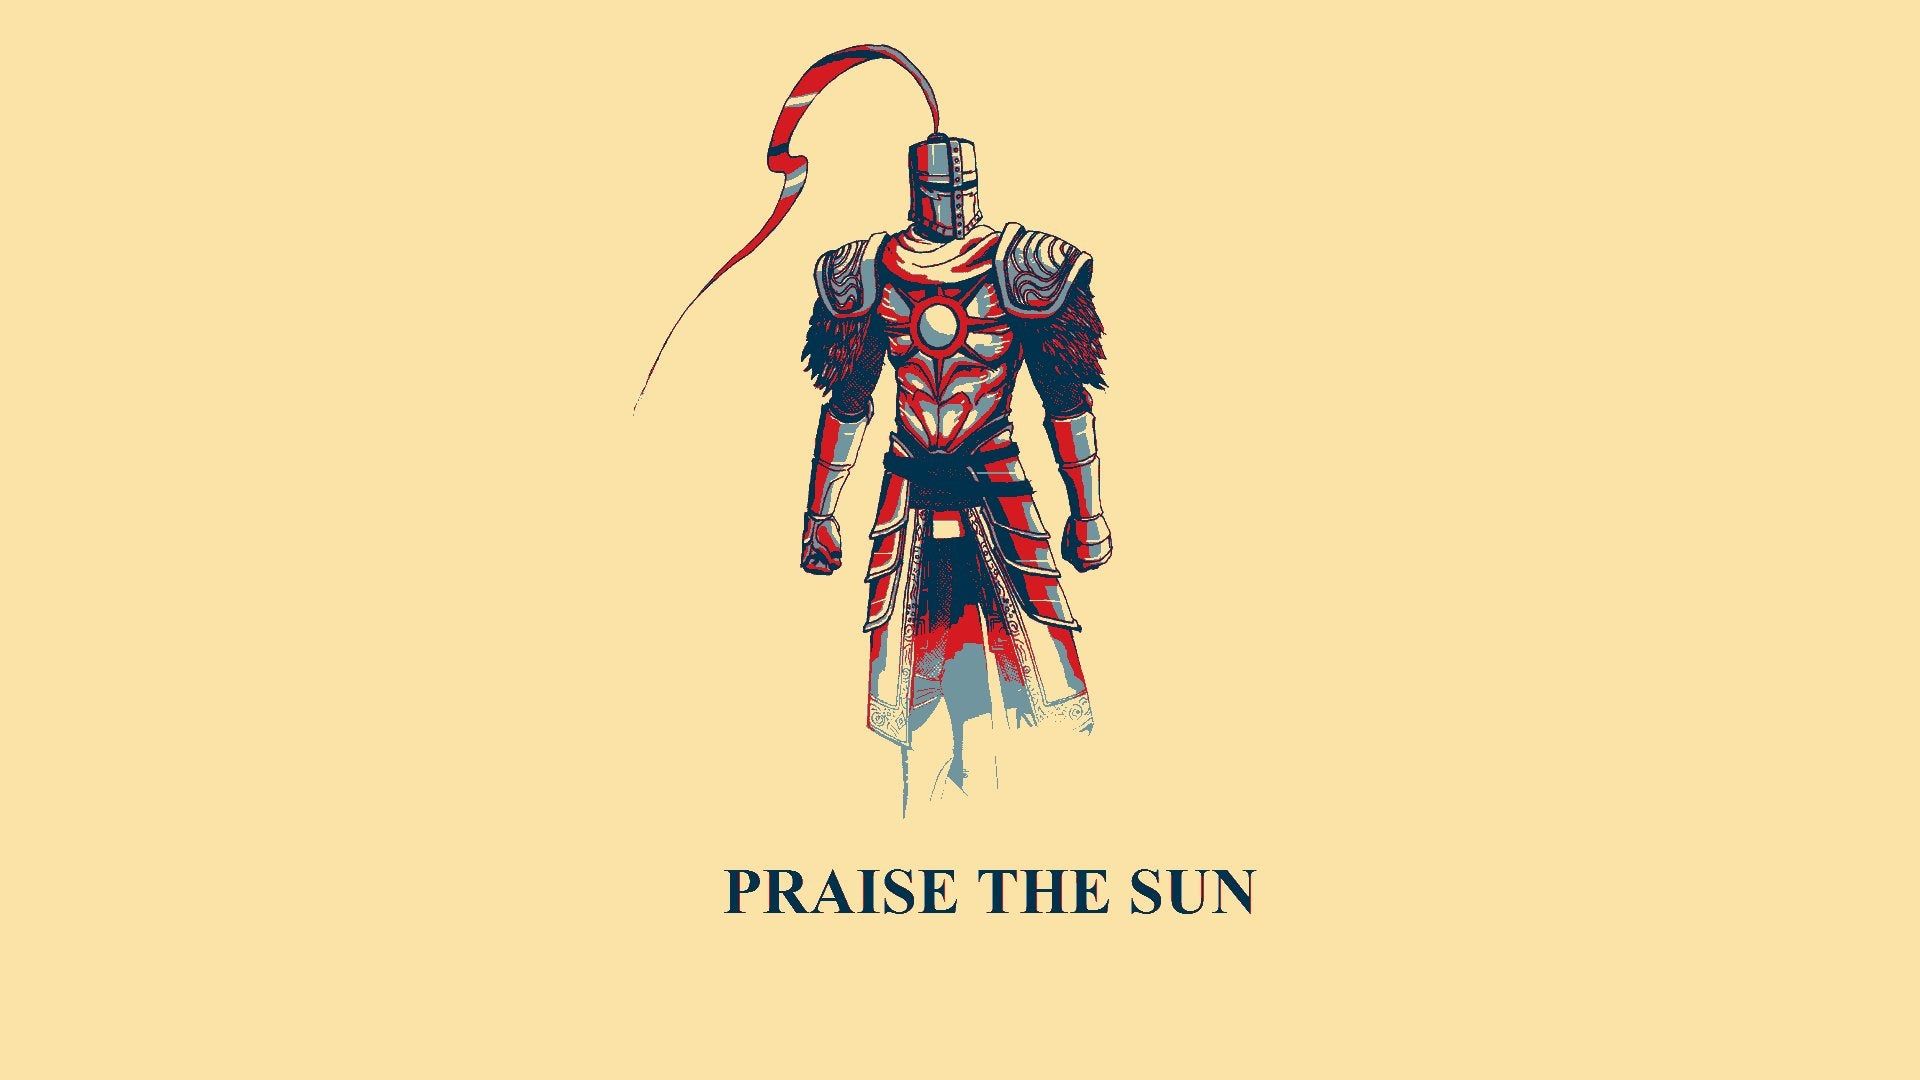 PRAISE THE SUN wallpaper (1920x1080)